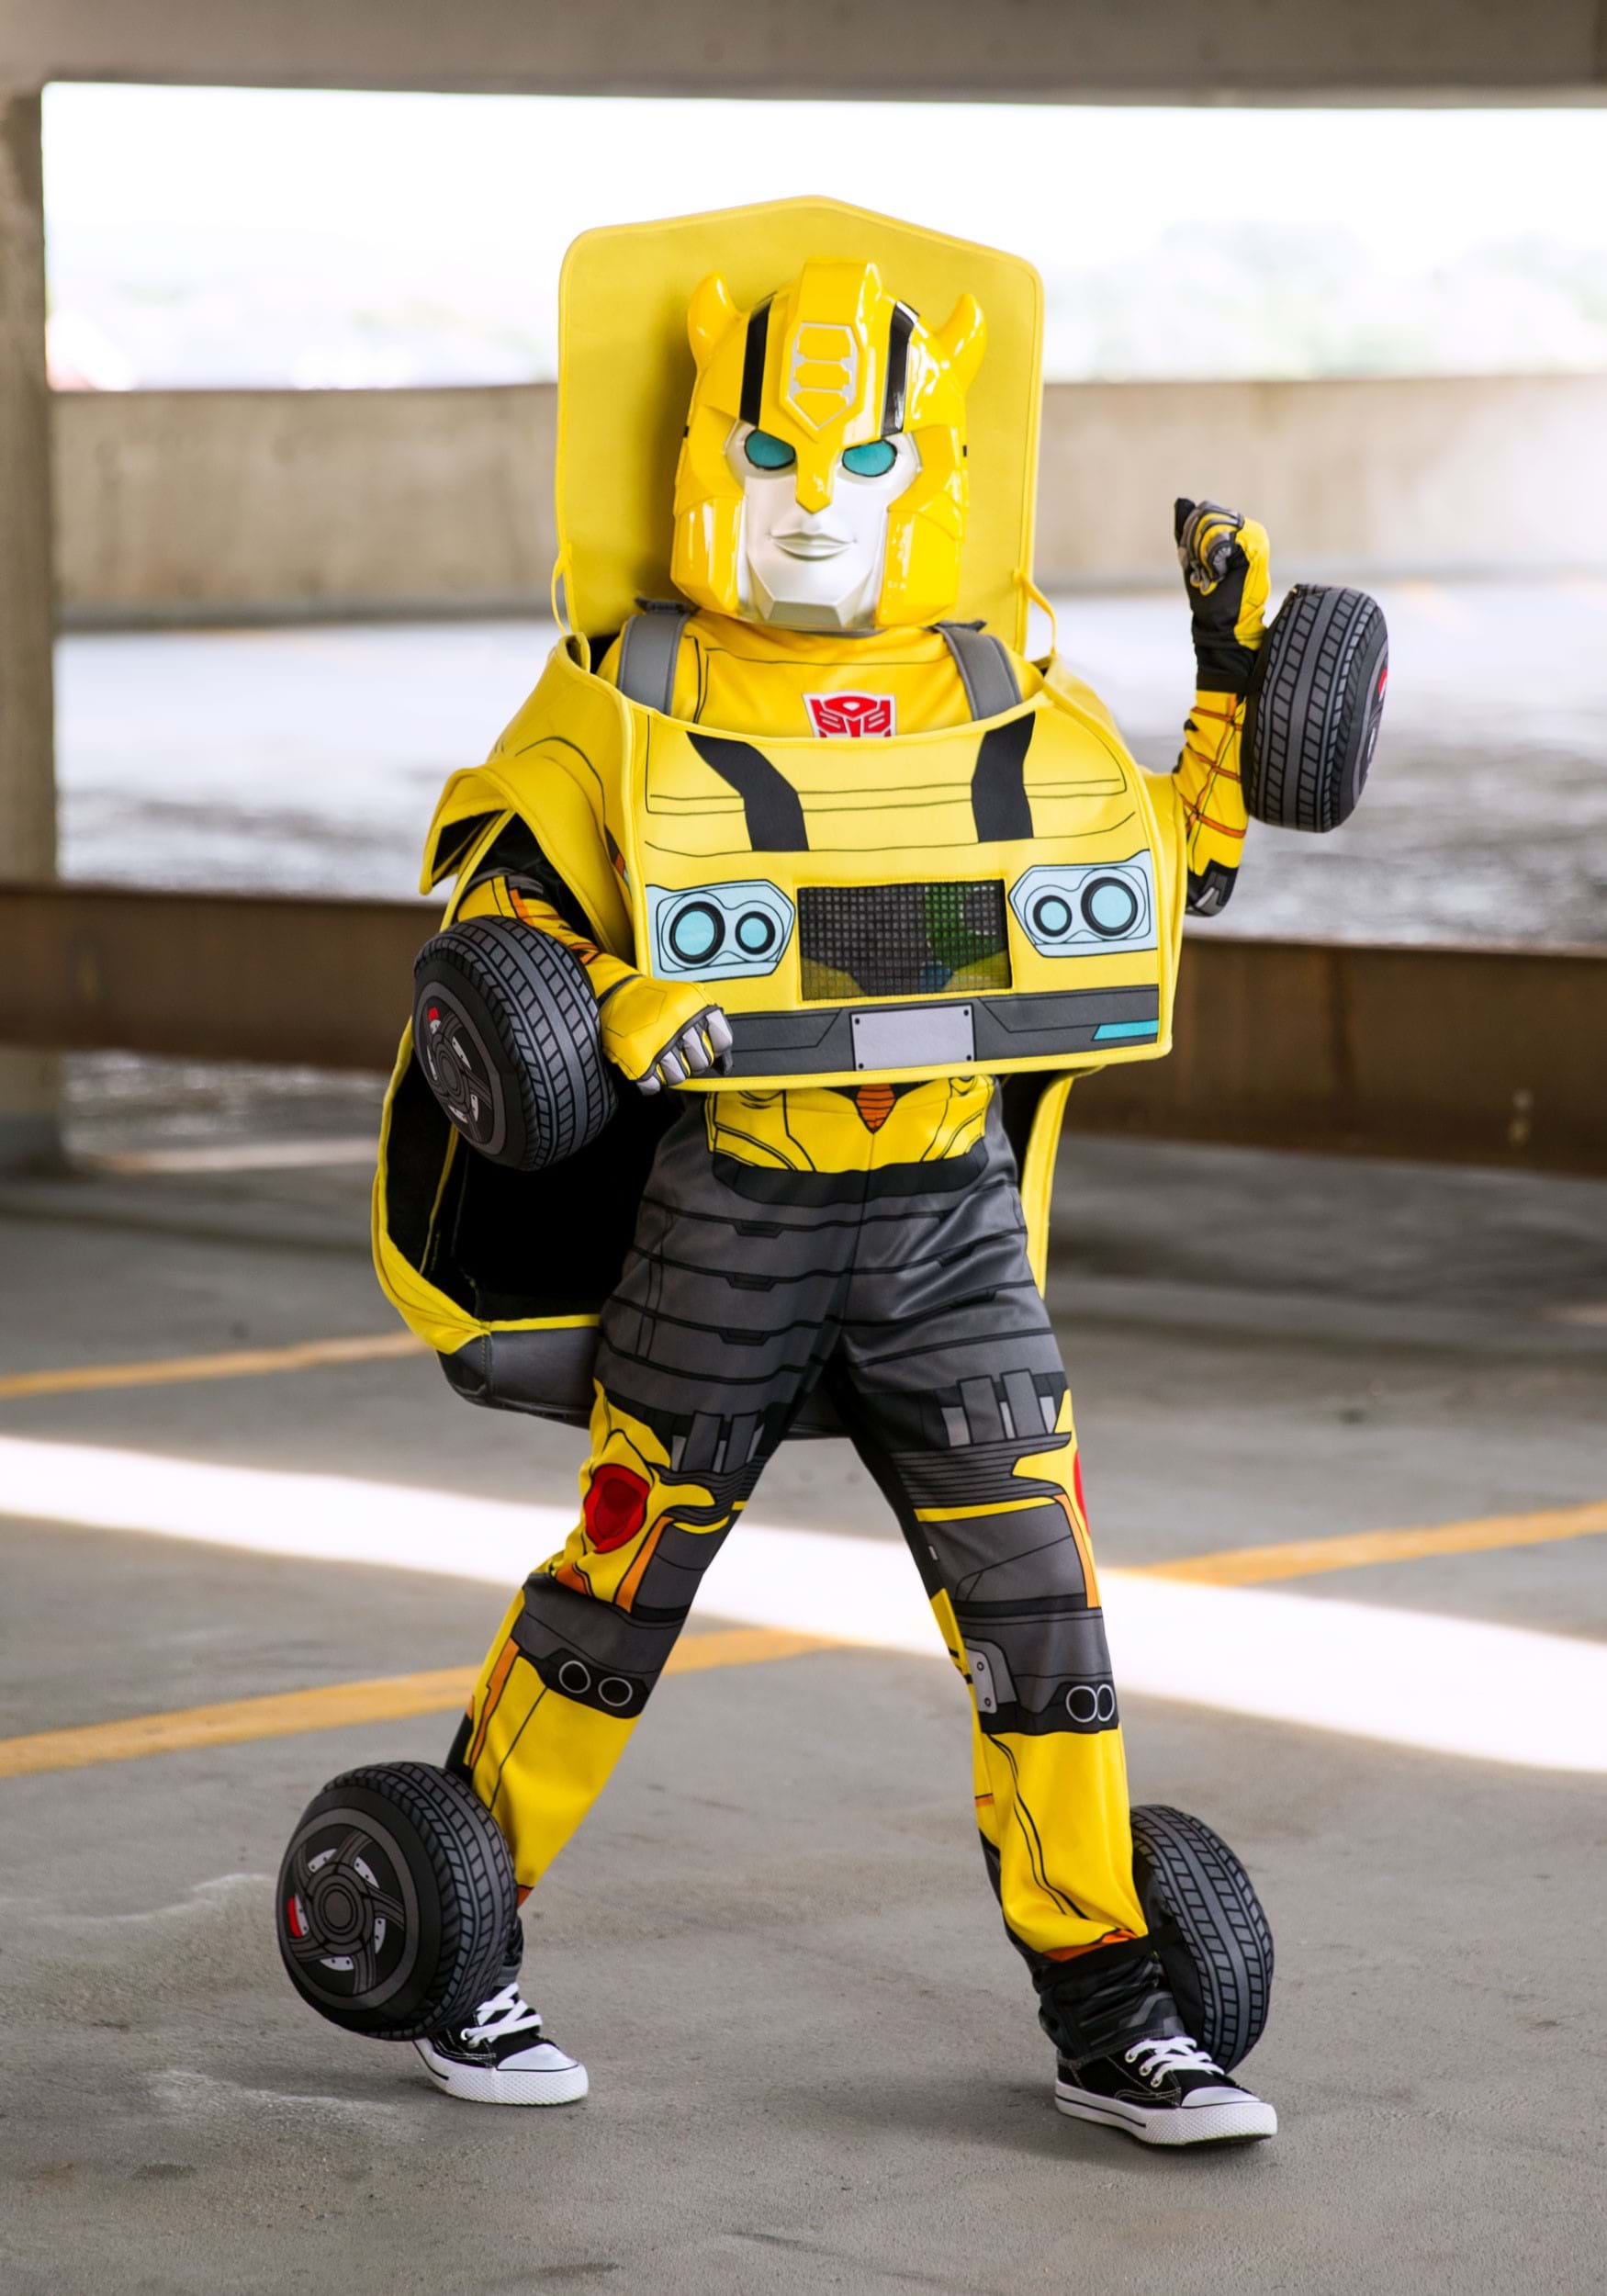 transformers yellow